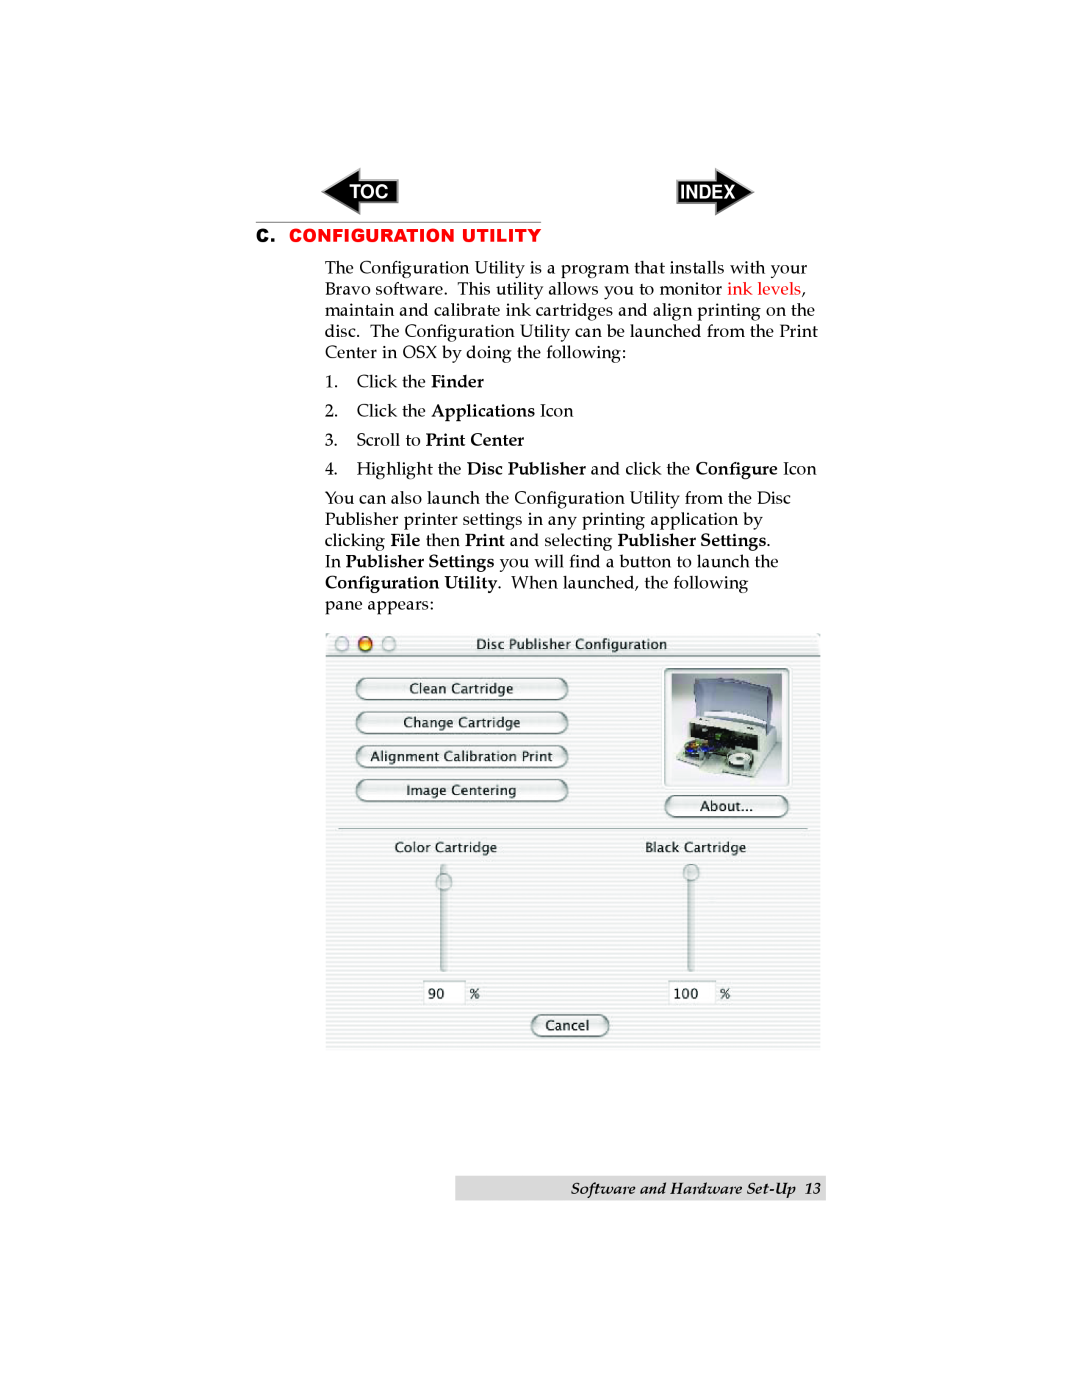 Primera Technology BravoTM user manual Index, C. Configuration Utility, Scroll to Print Center 